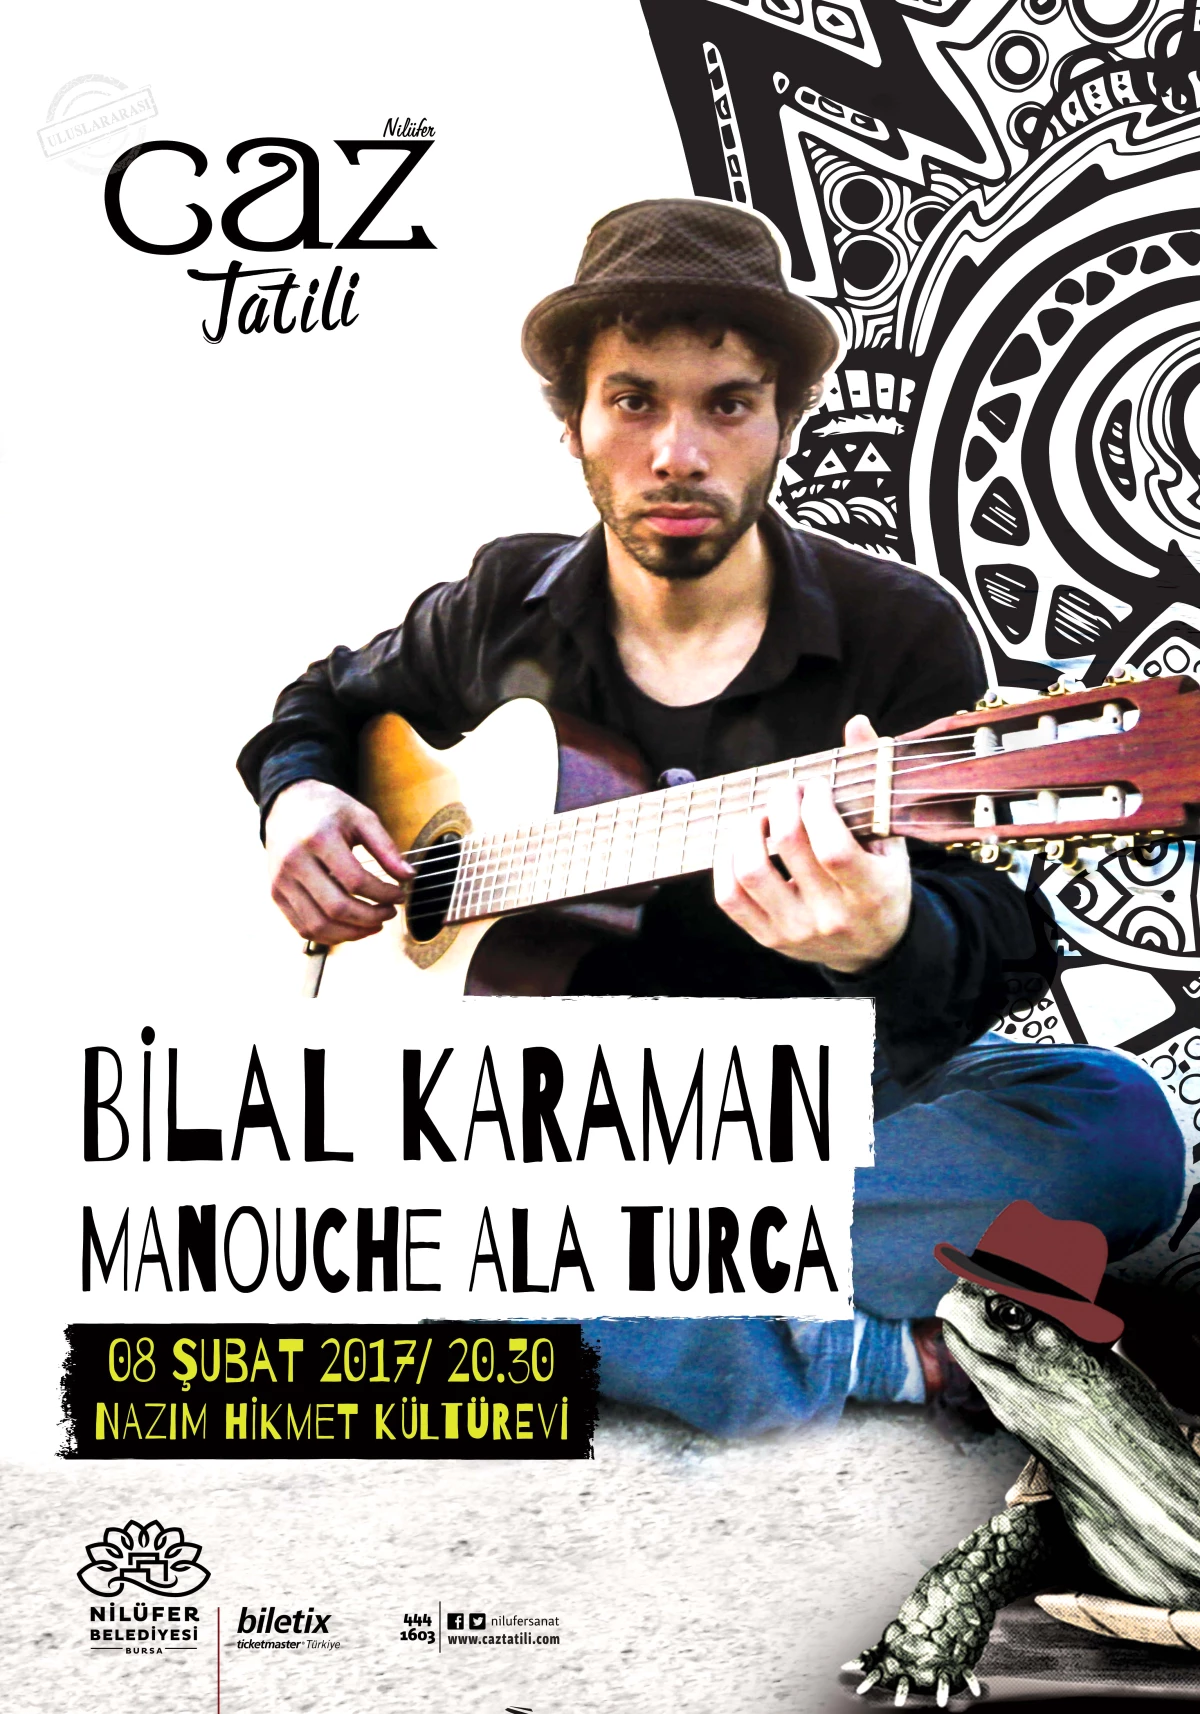 Bilal Karaman - Manouche Alaturca